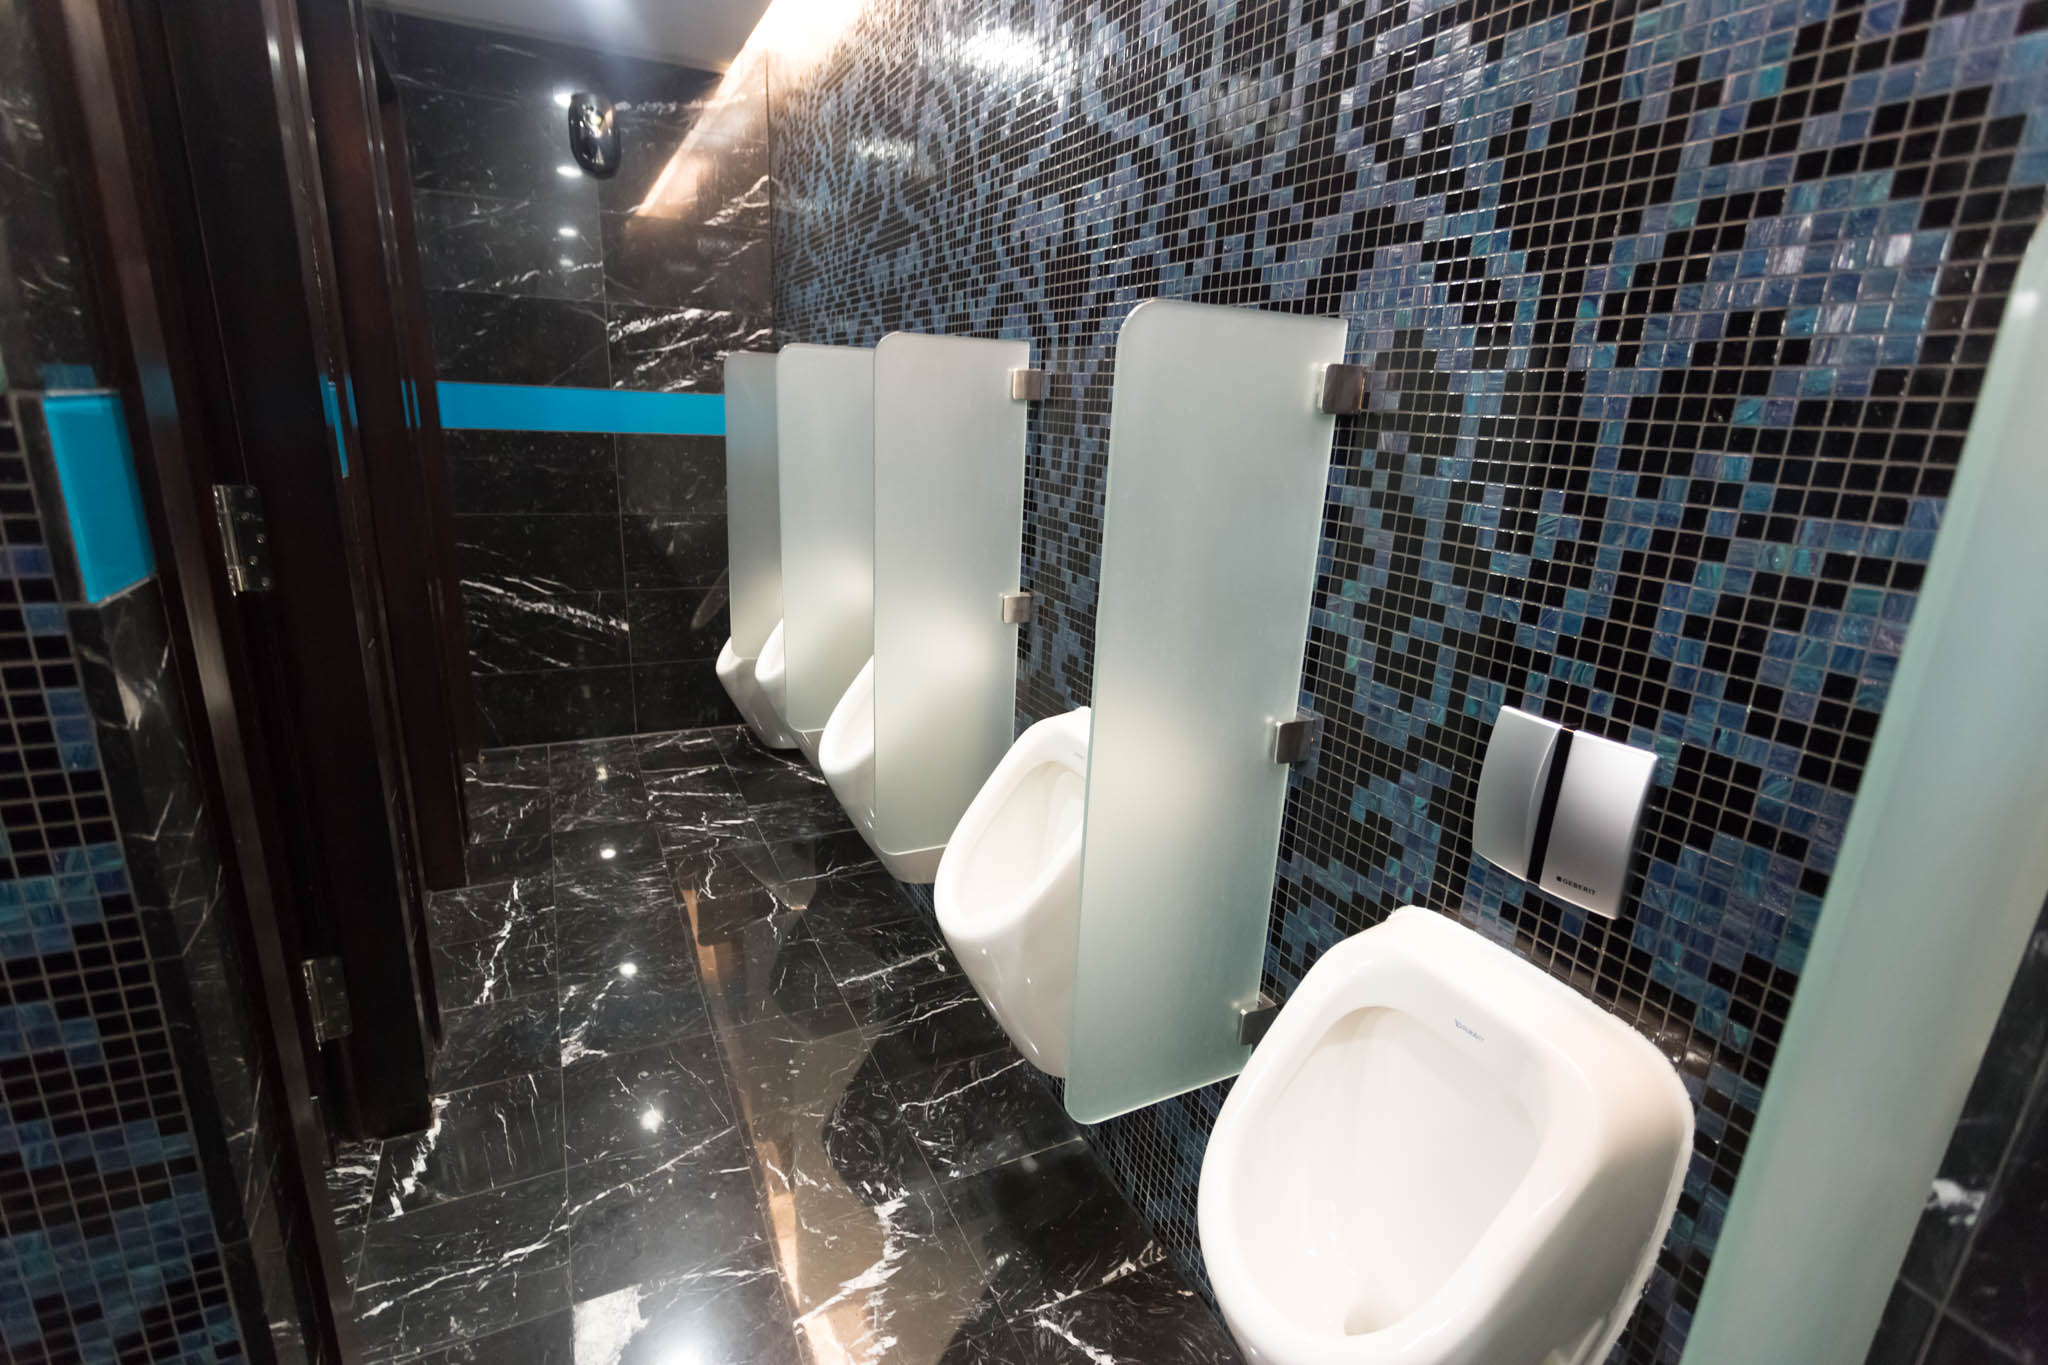 a row of urinals in a public bathroom